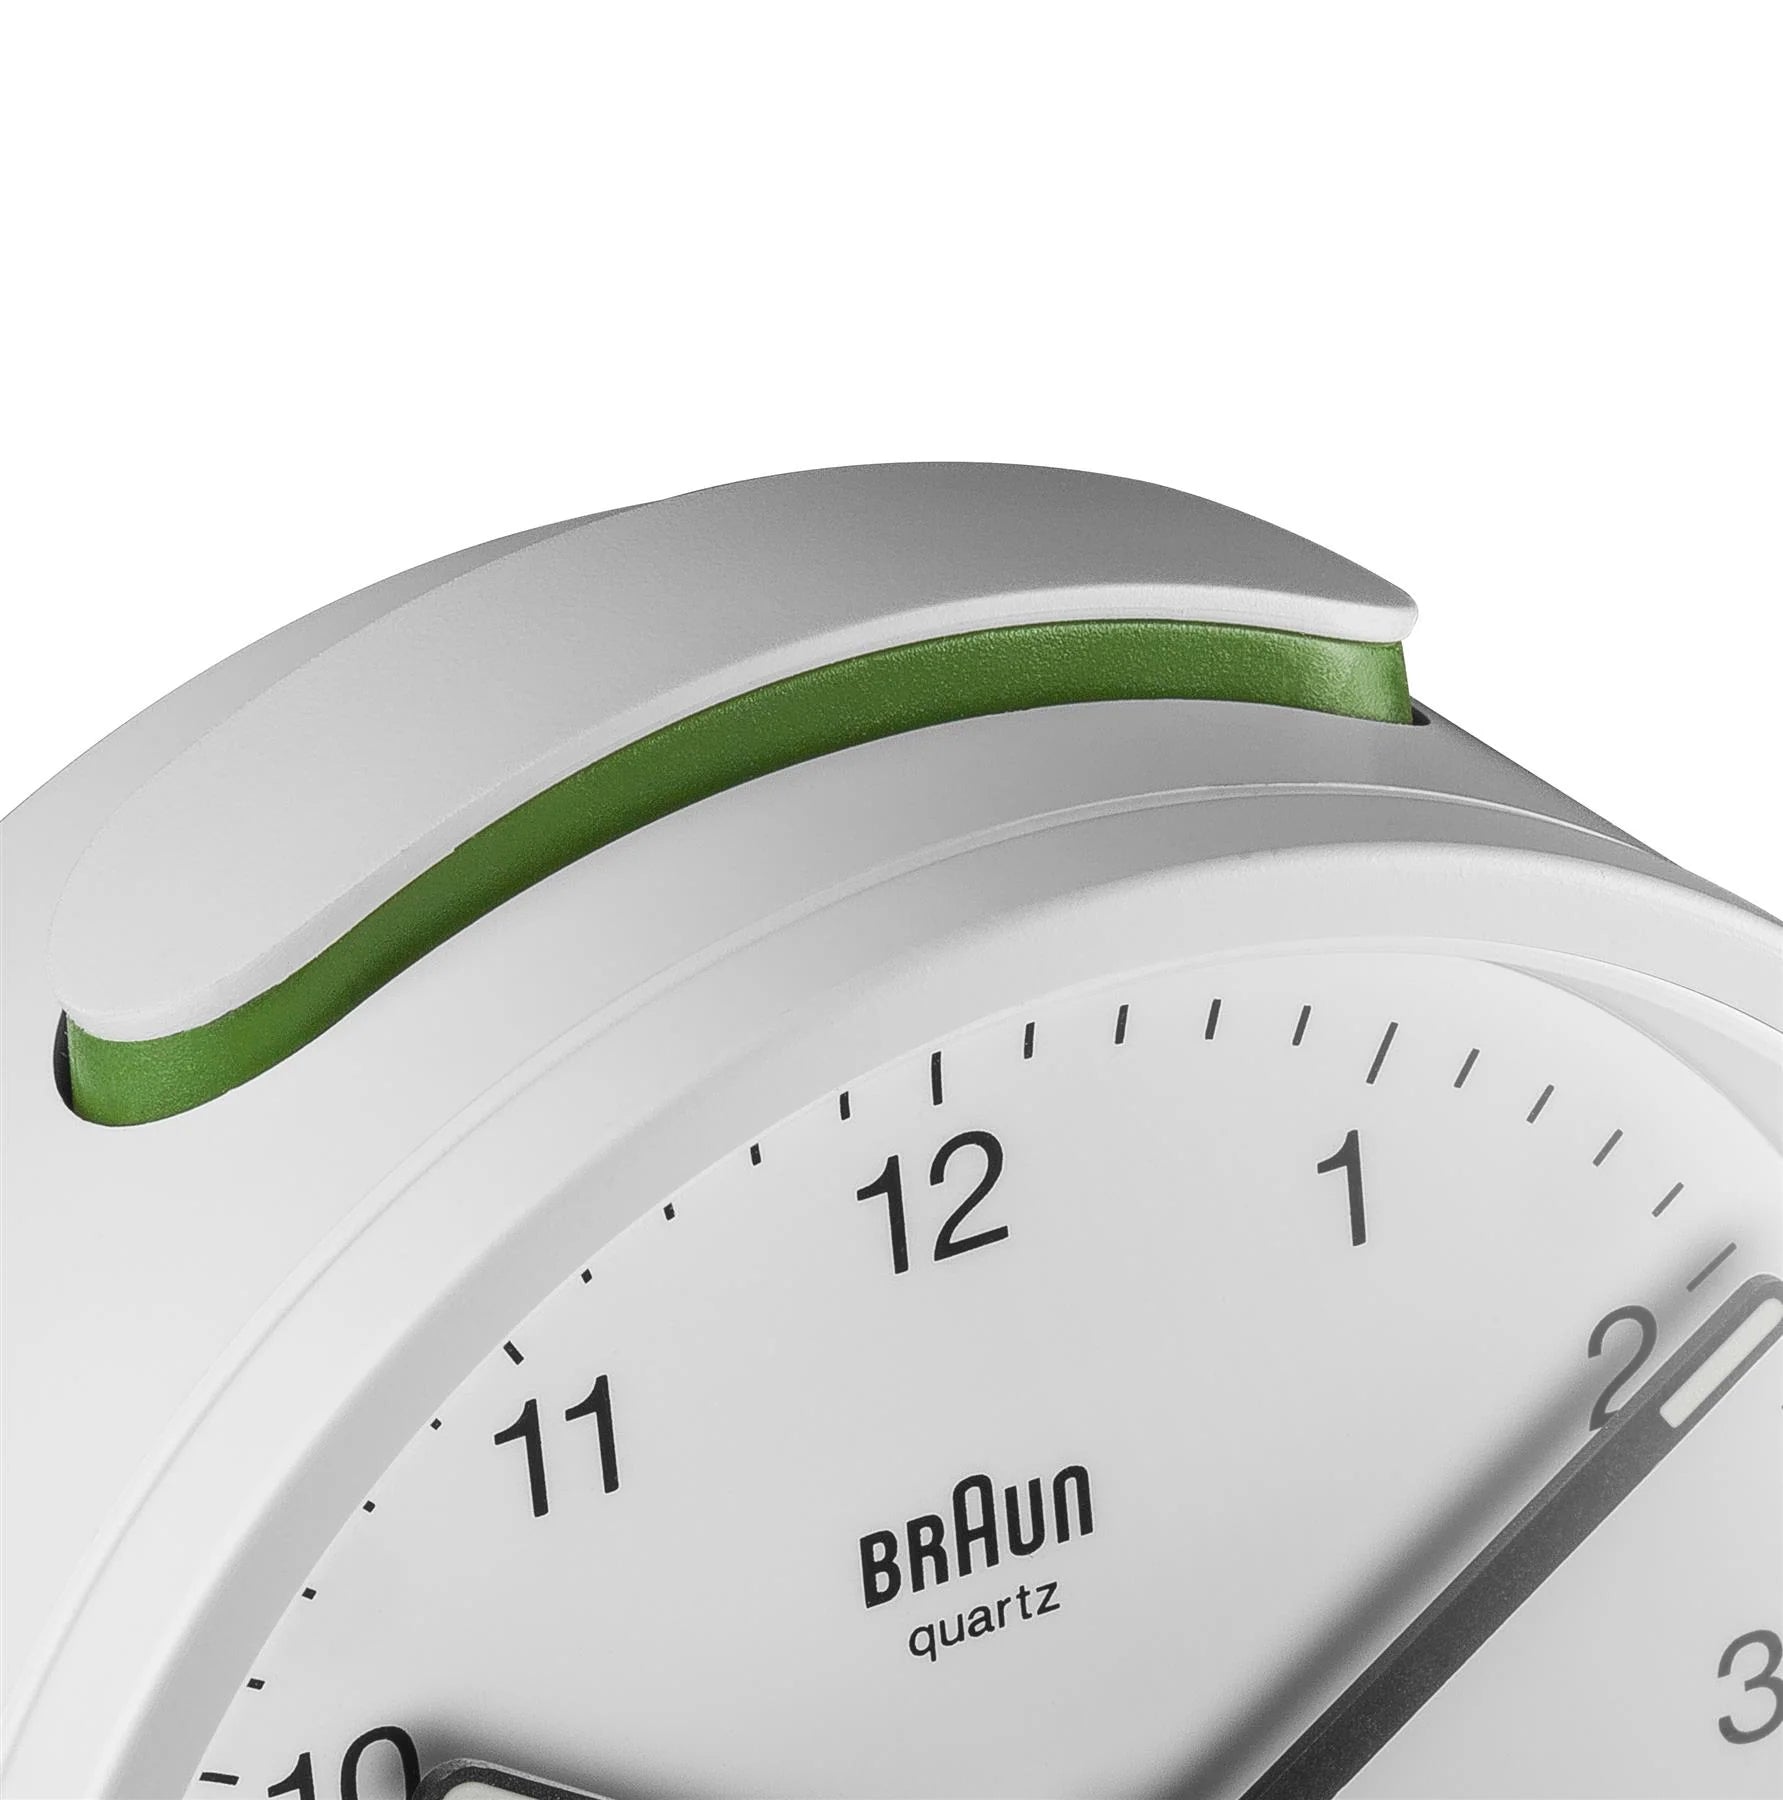 BC12W Braun Classic Analogue Alarm Clock - White